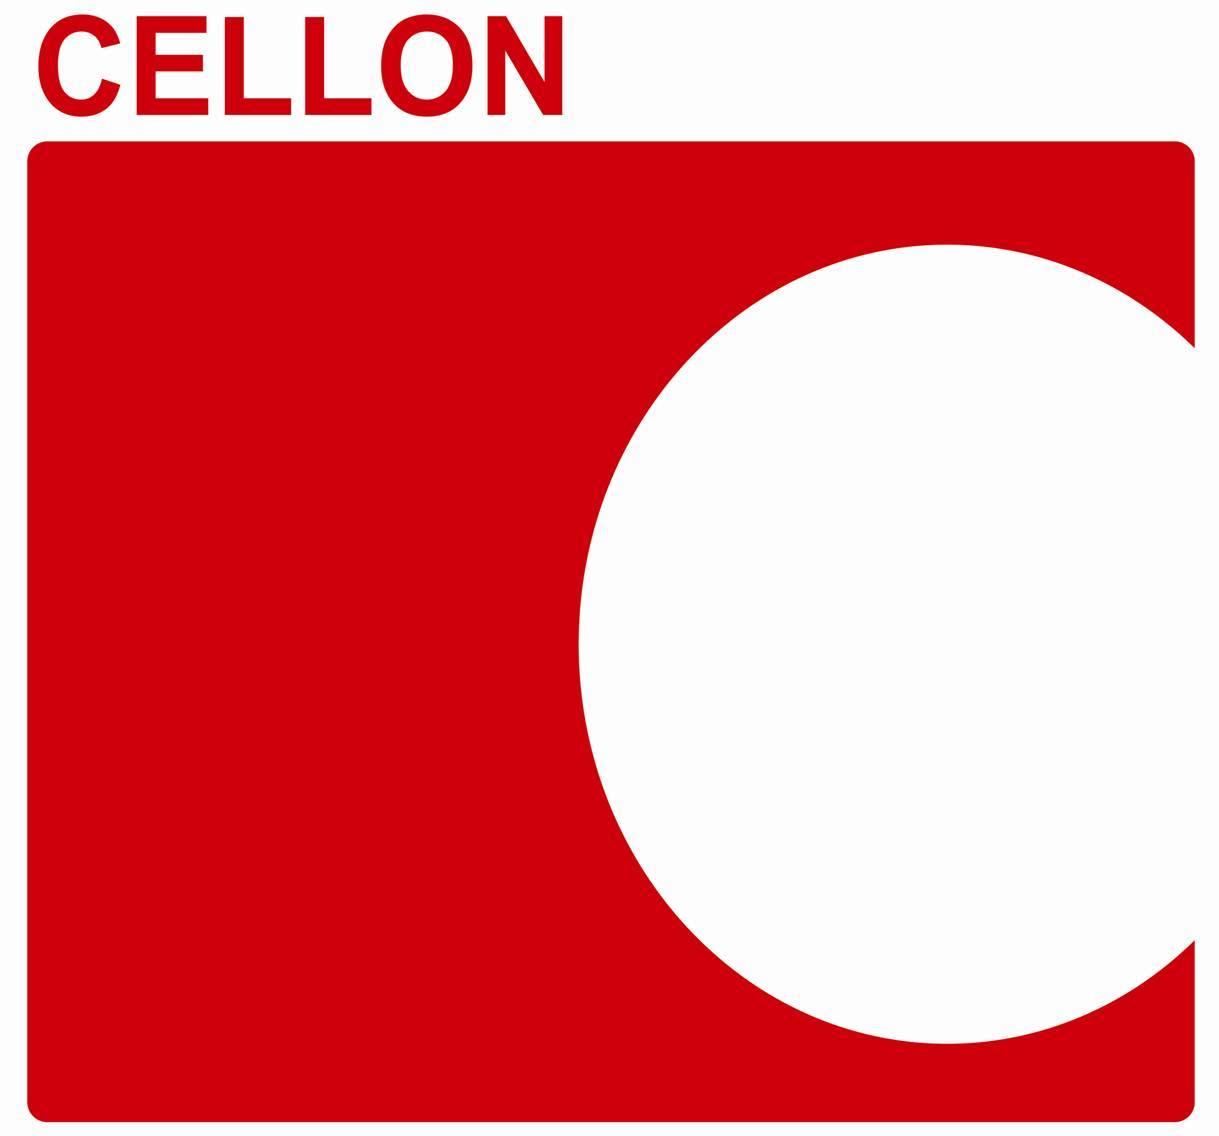 http://egocms.dechema.de//en/3DCC2018_Exhibition-height-1136-width-1219/_/Cellon_Logo.jpg